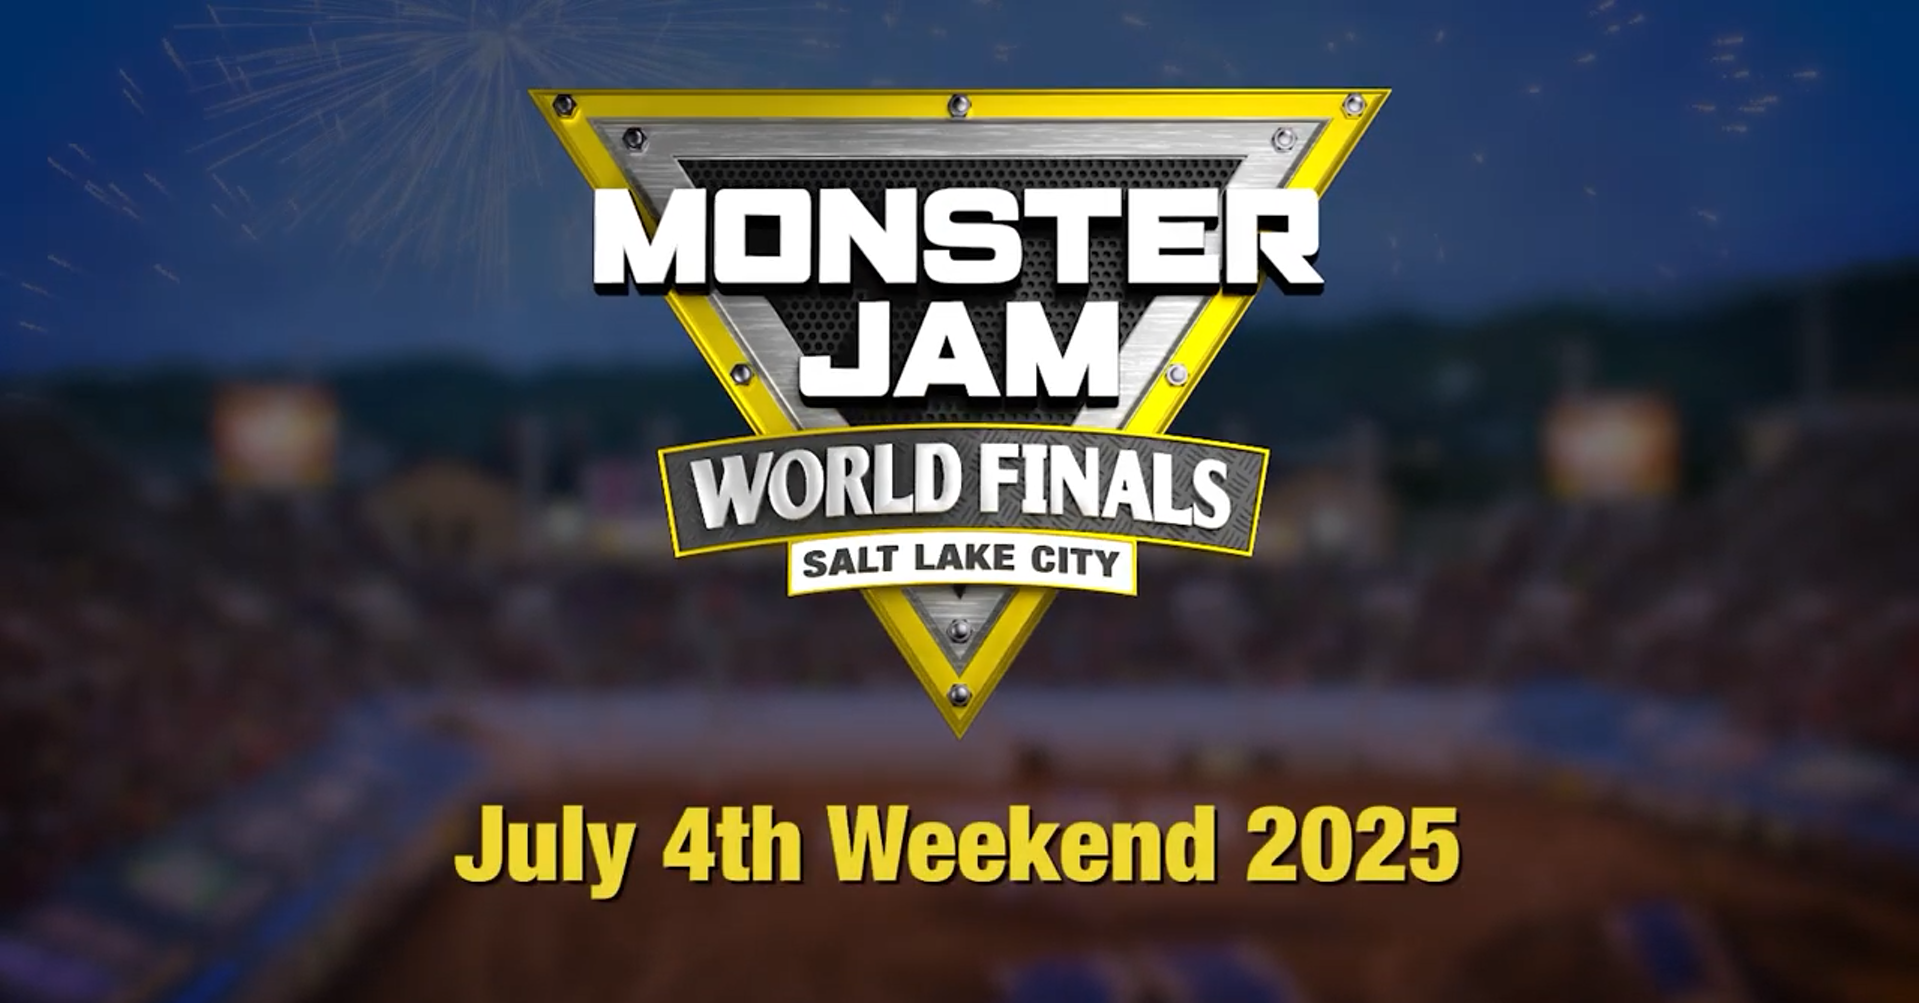 Monster Jam World Finals Salt Lake City logo - July 4th Weekend 2025